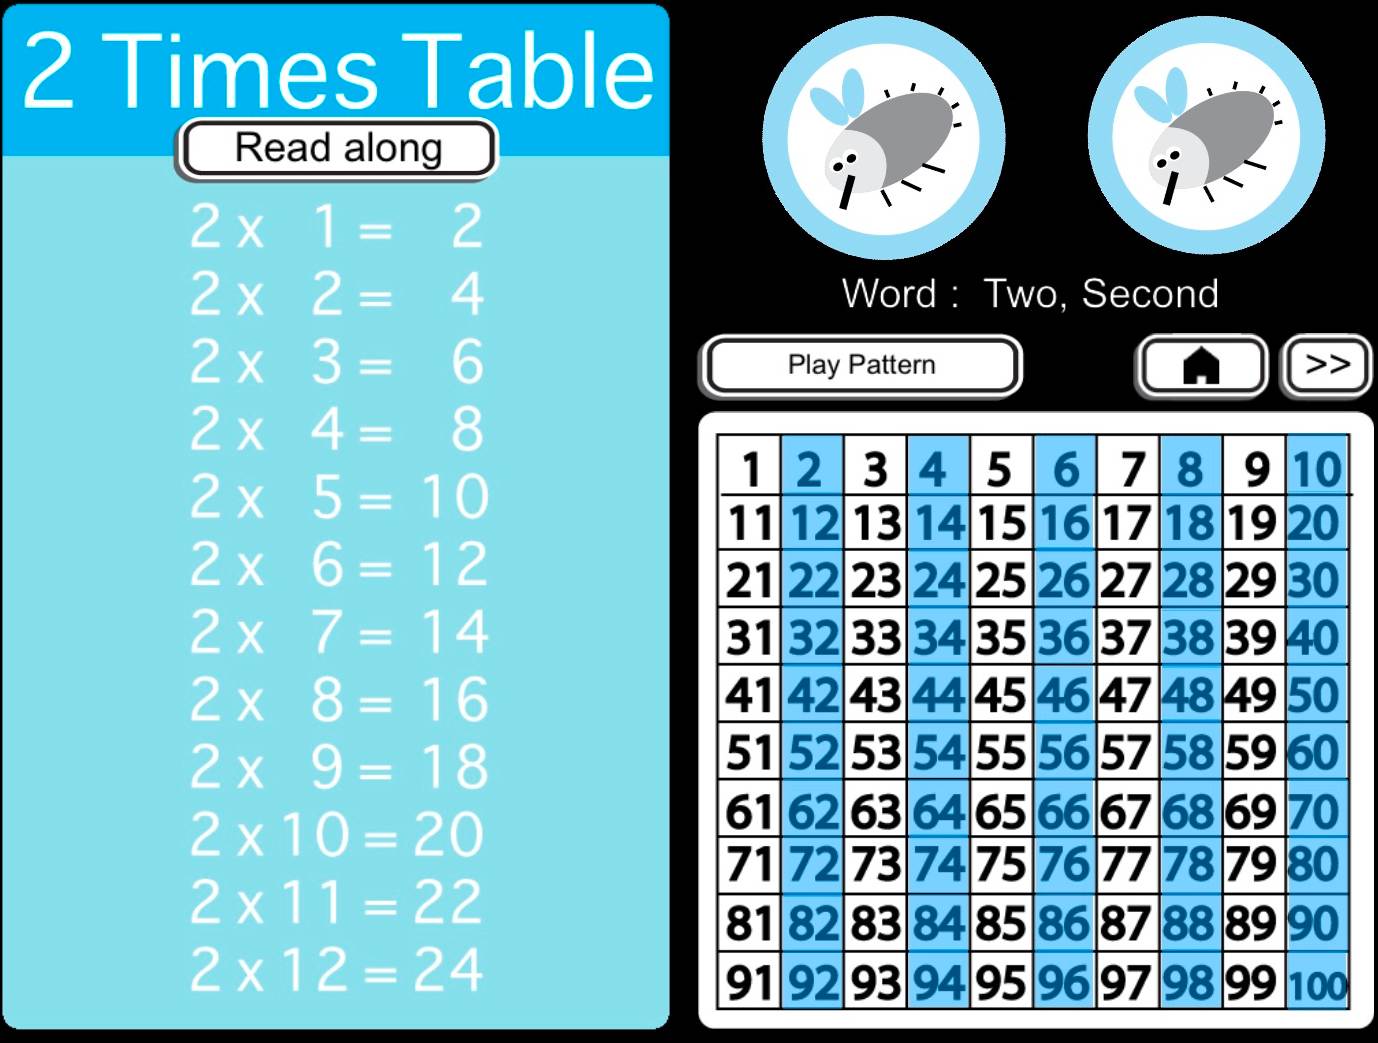 Times Table OK MA 1.3 : 2 times table